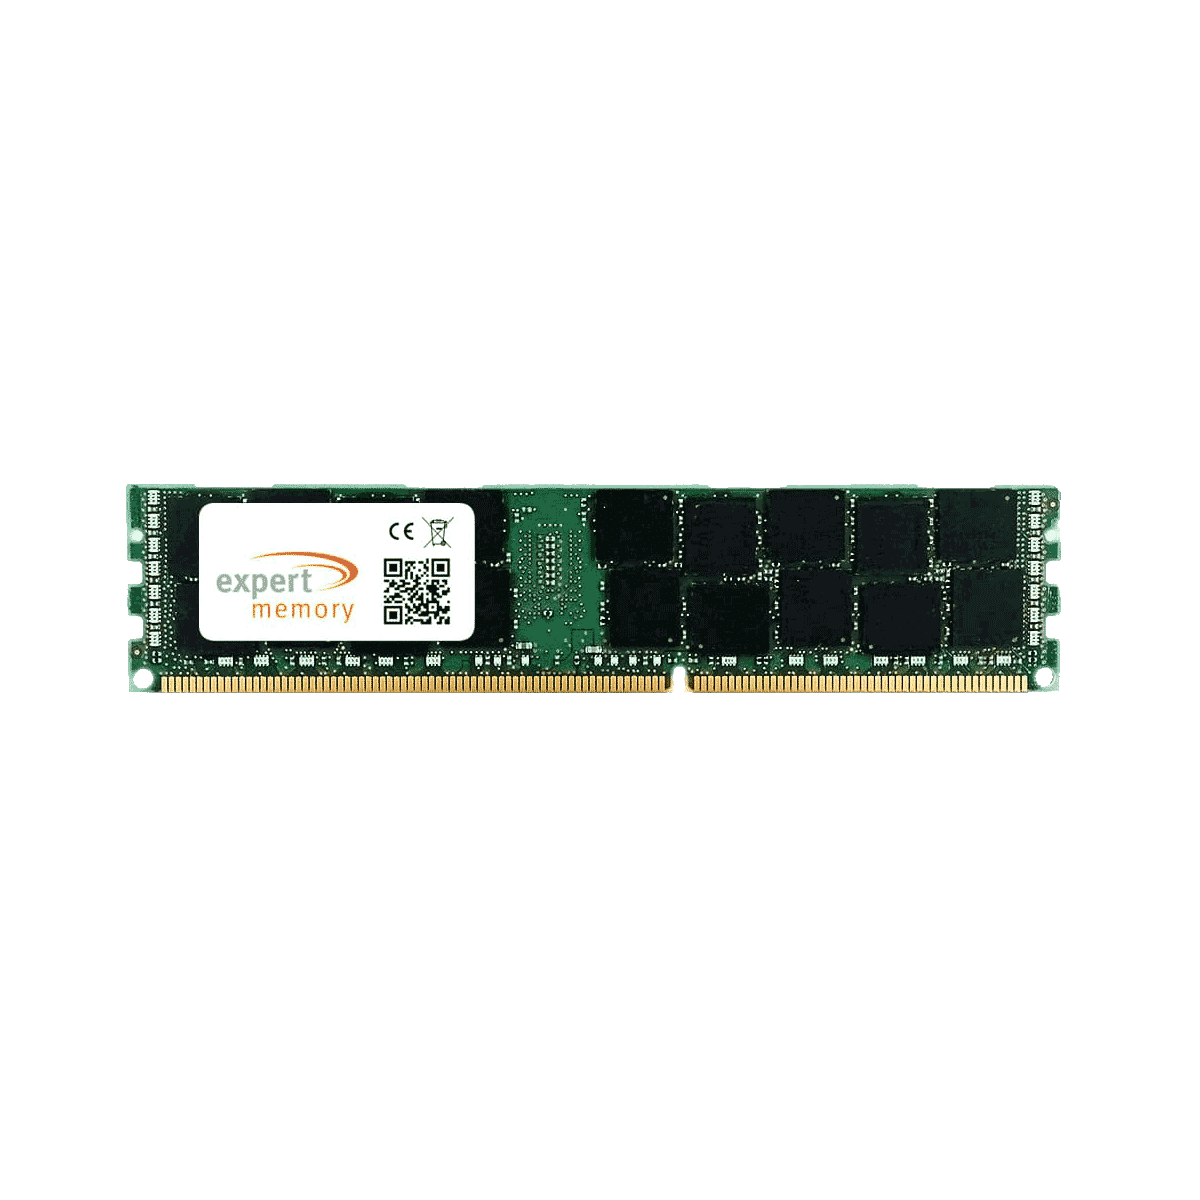 EXPERT MEMORY 32GB RDIMM 1600 PowerEdge 32 DDR3 Server Dell LV 4Rx4 RAM Memory Upgrade GB R920